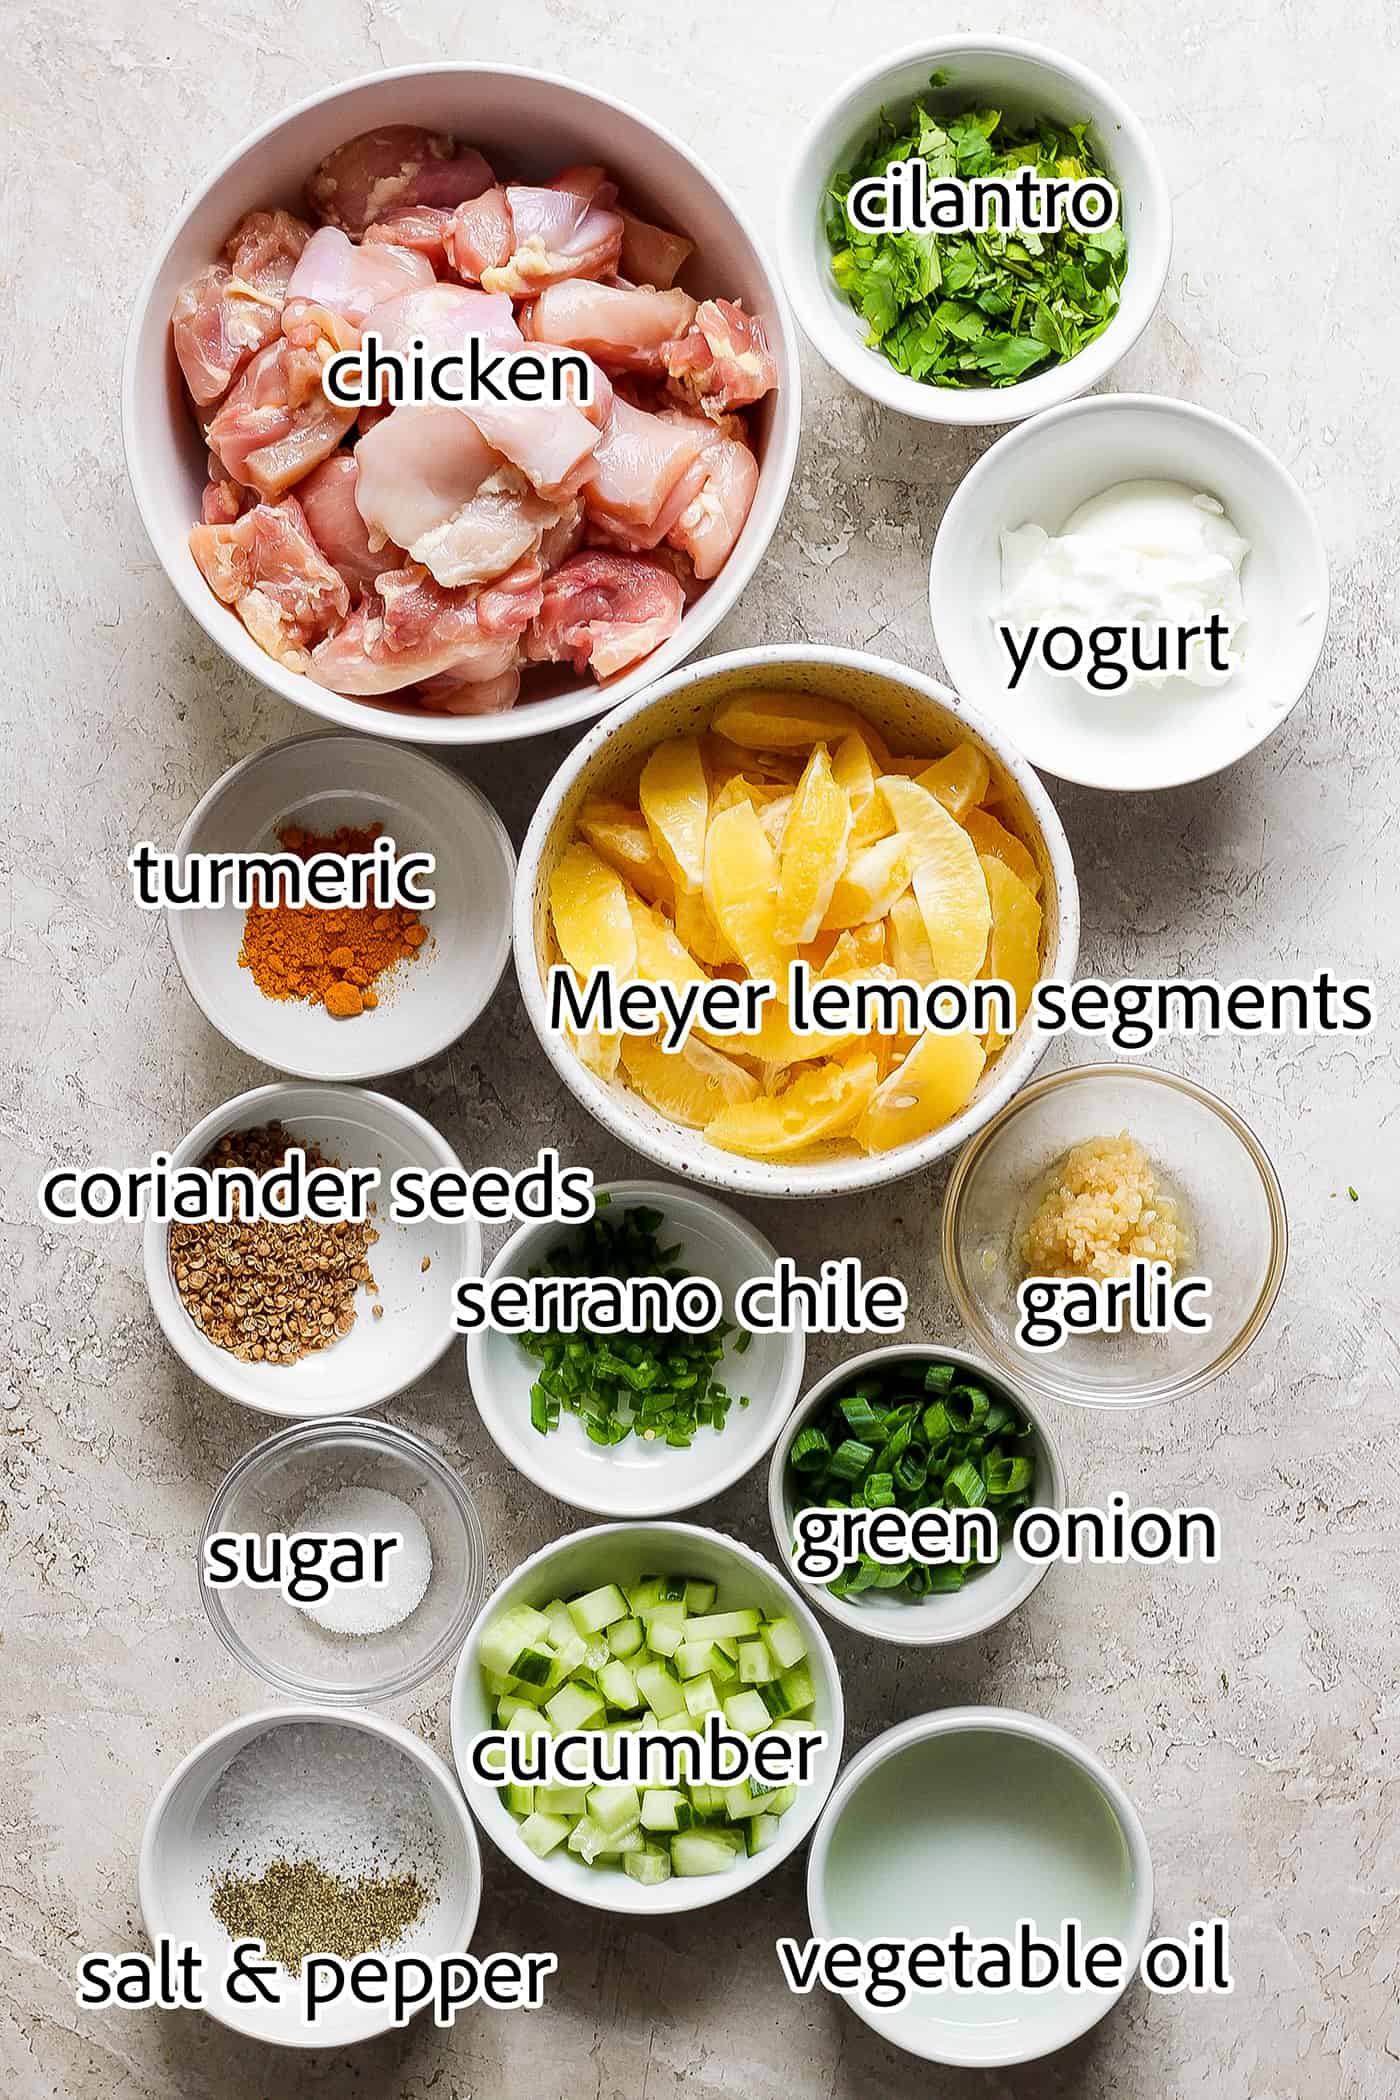 Ingredients for A plate of Chicken Kabobs with Meyer Lemon Salsa are shown: chicken, Meyer lemon, coriander seeds, turmeric, yogurt, salt, serrano chile, green onions, garlic, sugar, vegetable oil, cucumber, cilantro.